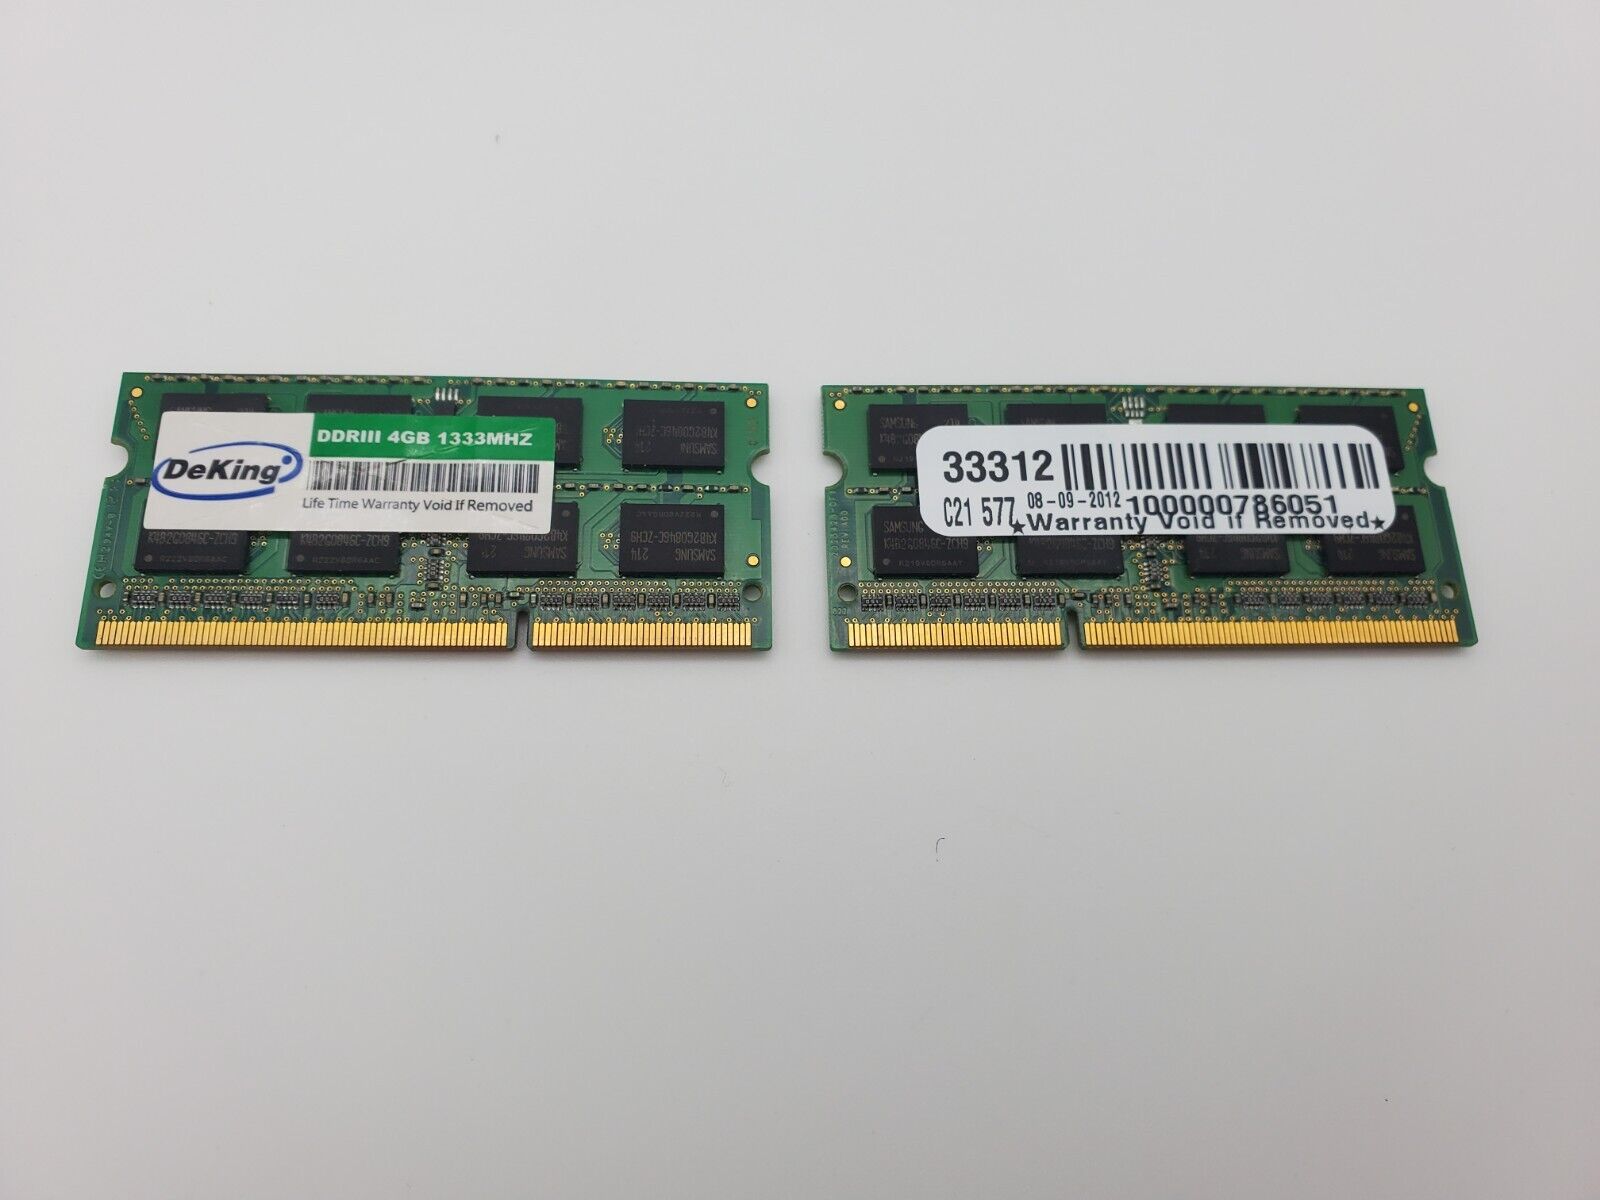  DDRIII 4 GB Laptop Ram Modules (8 GB Total)